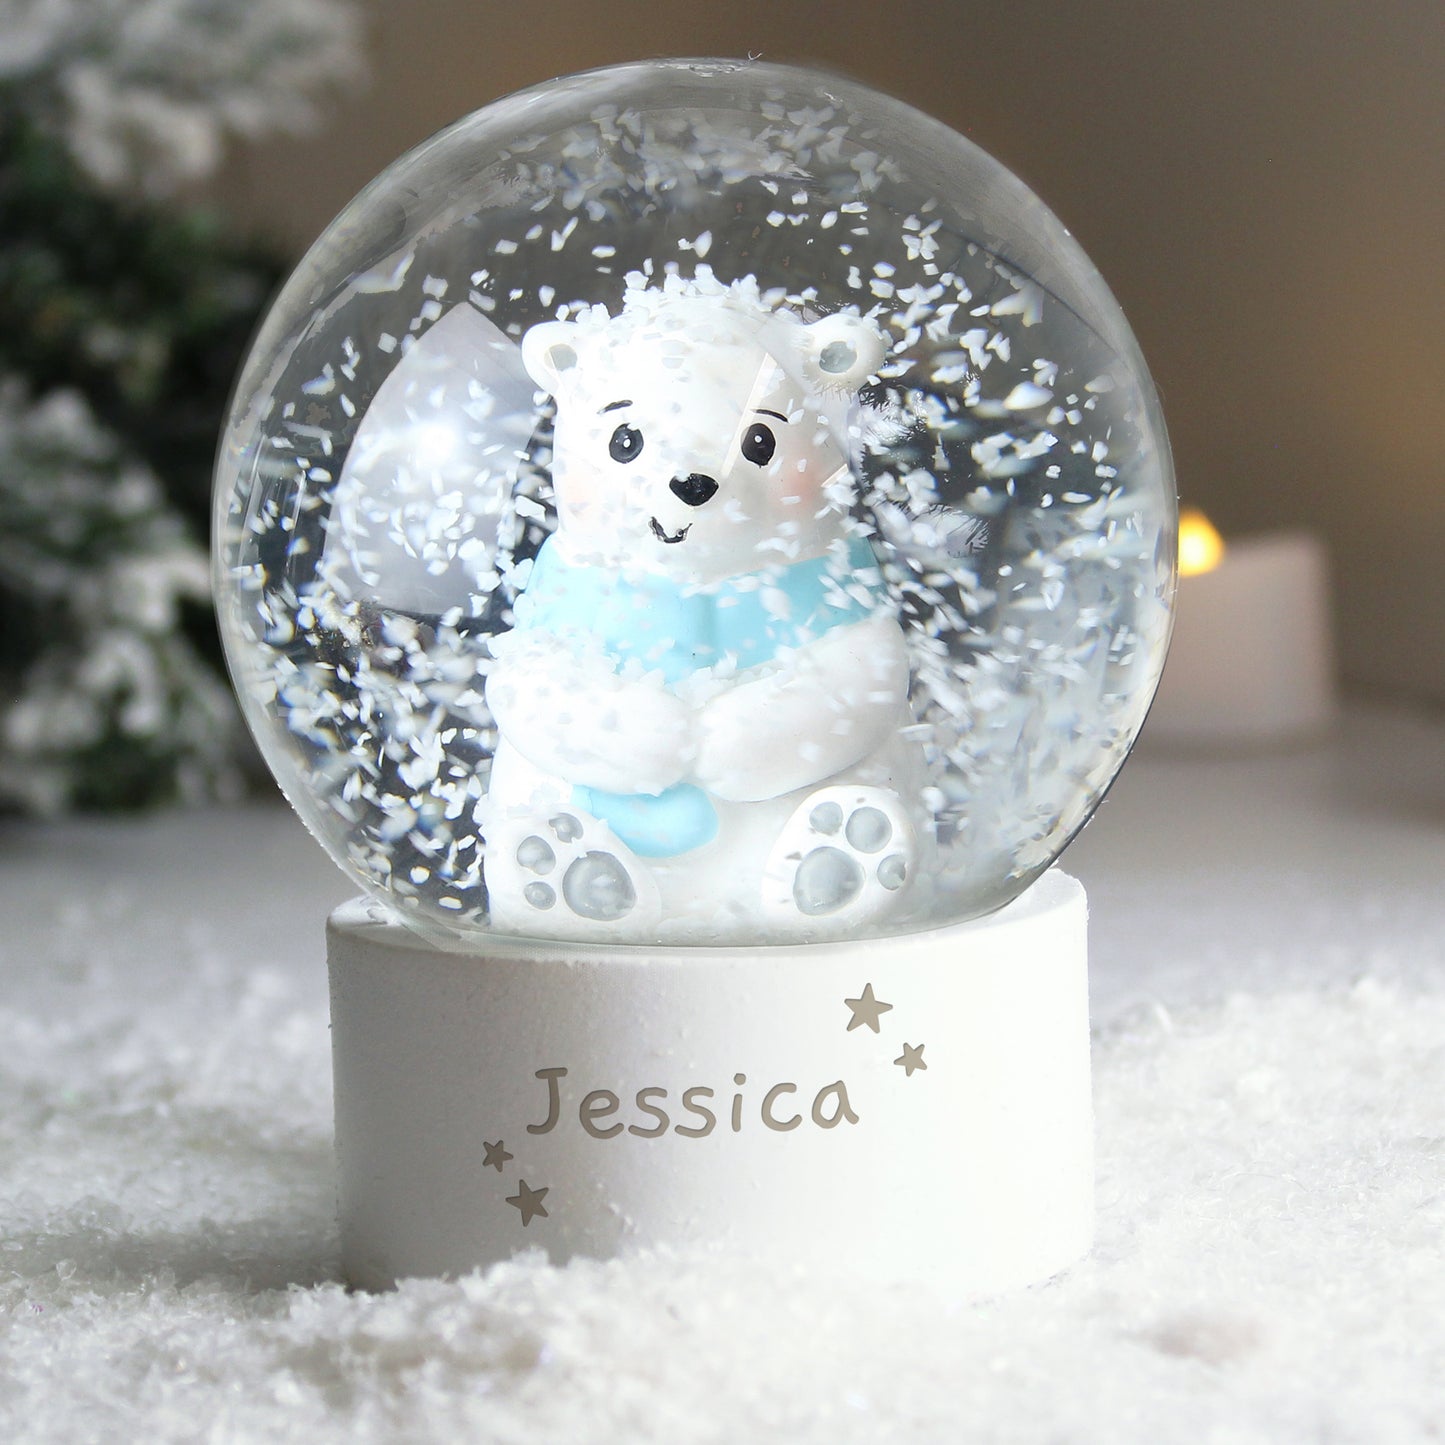 Personalised 'Any Name' Polar Bear Snow Globe